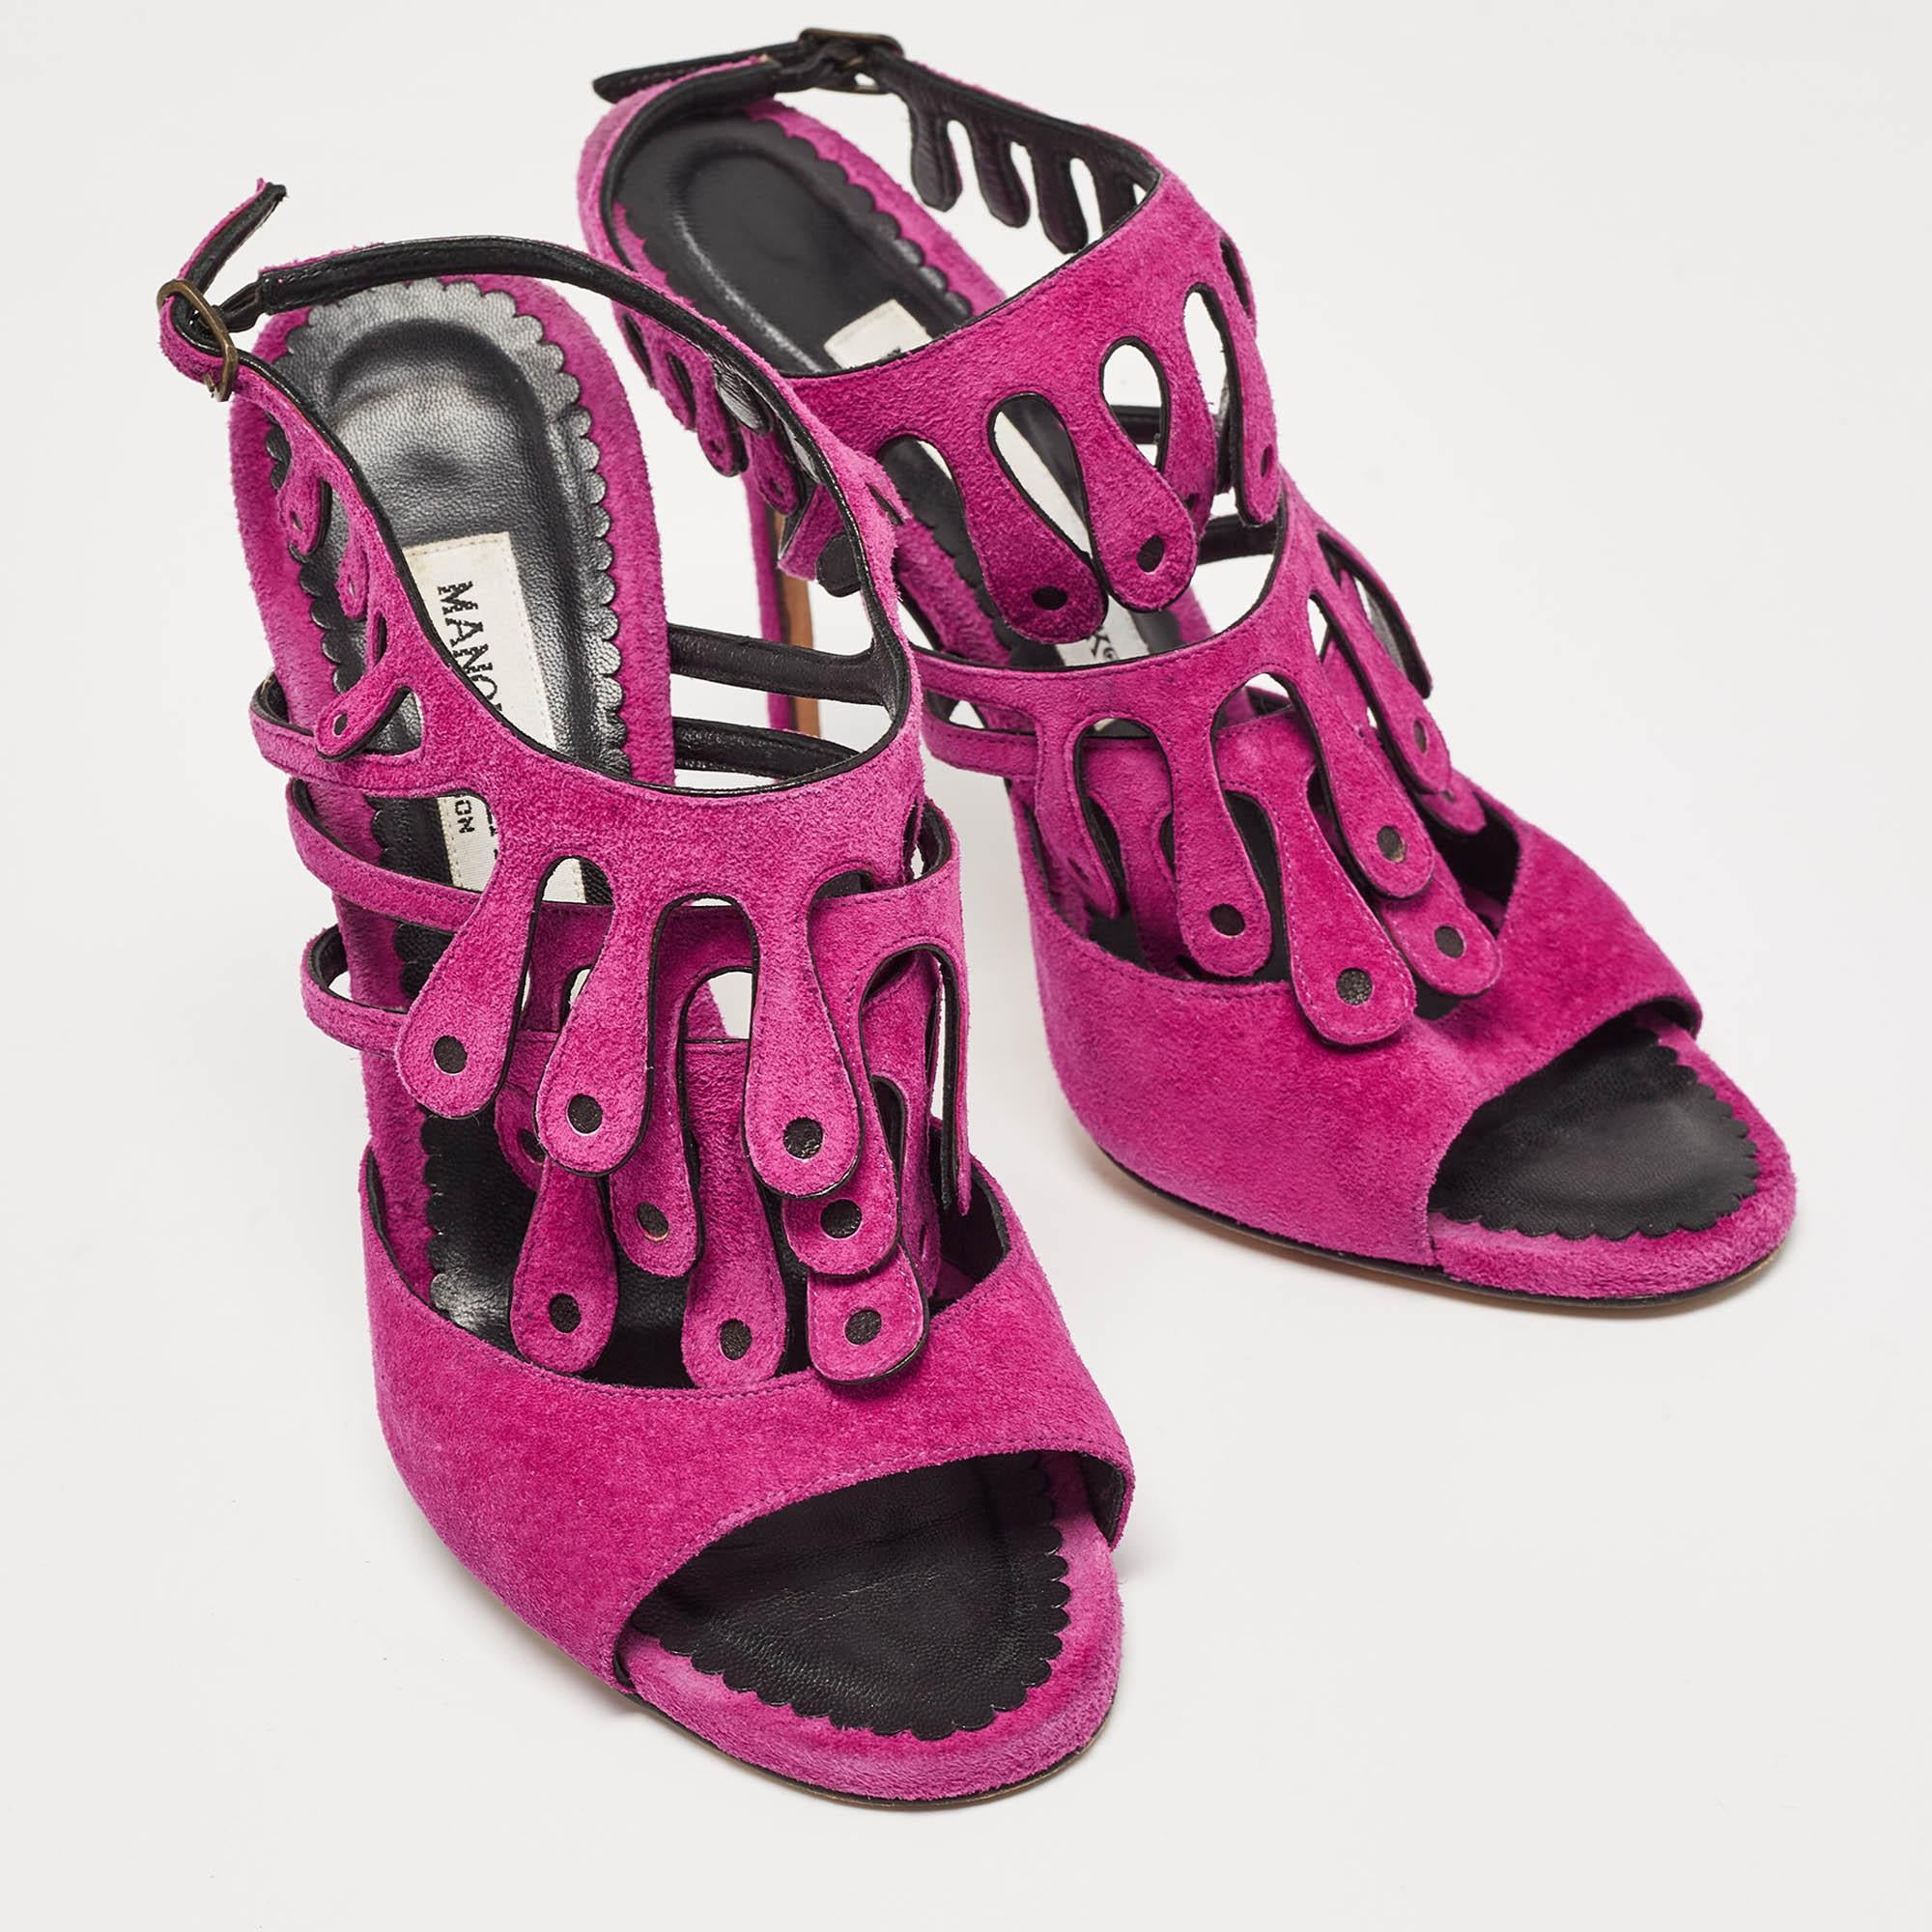 Manolo Blahnik Purple Suede Toubib Ankle Strap Sandals Size 36 For Sale 2